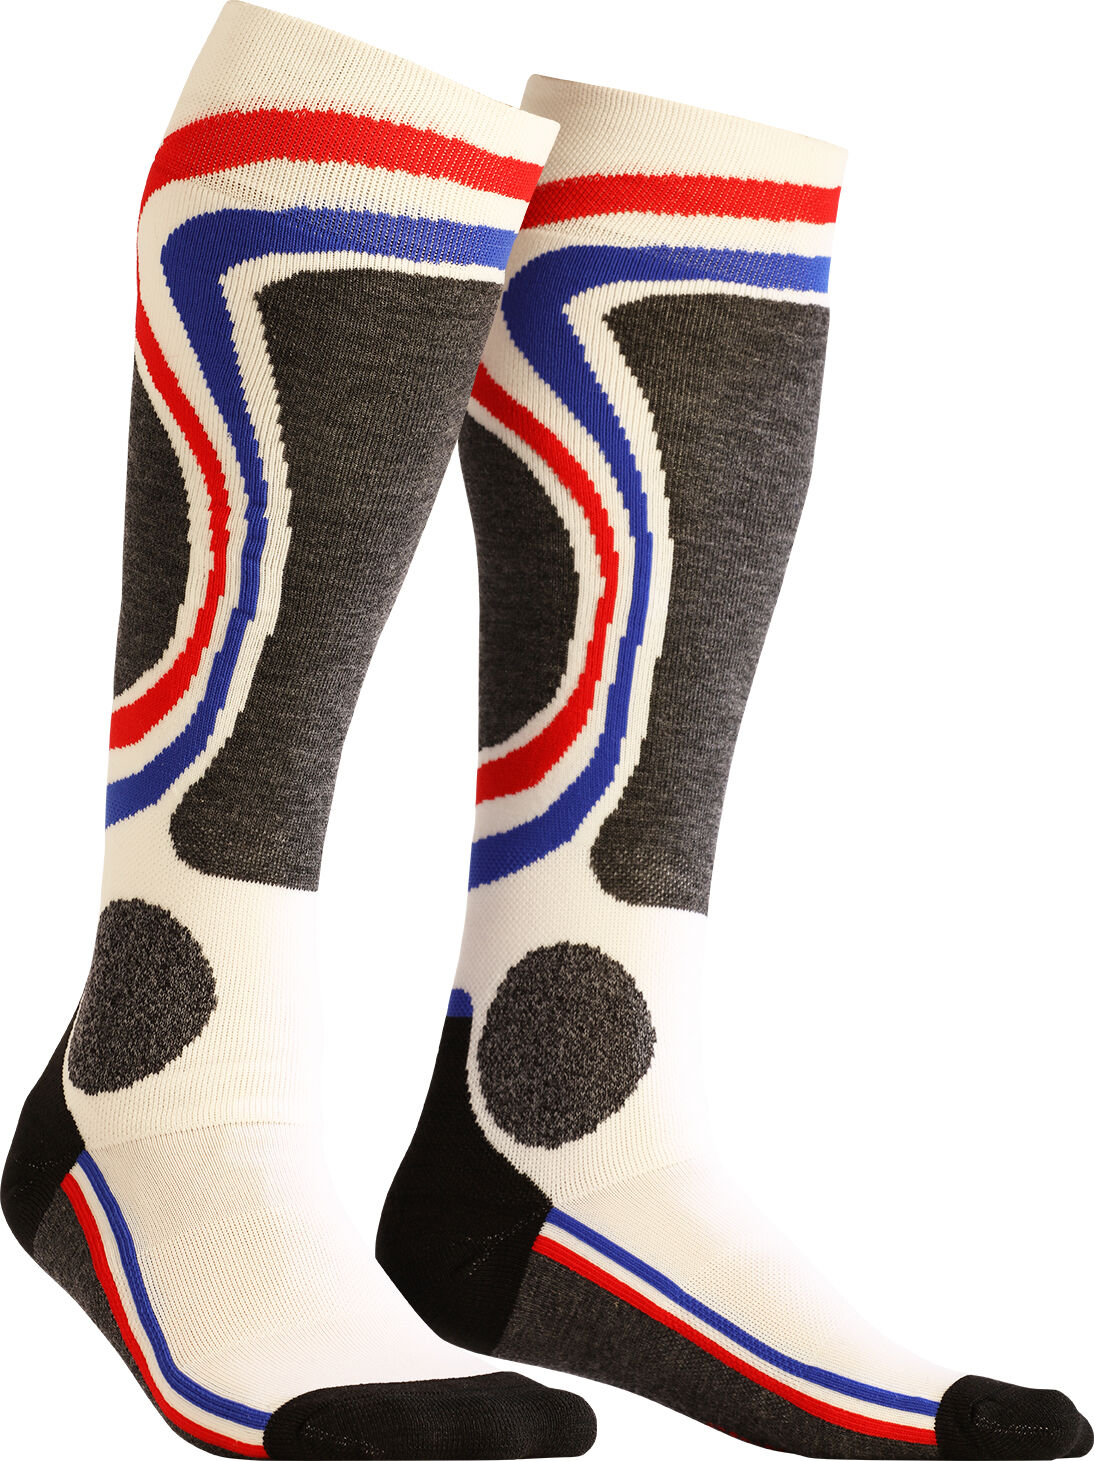 Monnet French - Ski socks